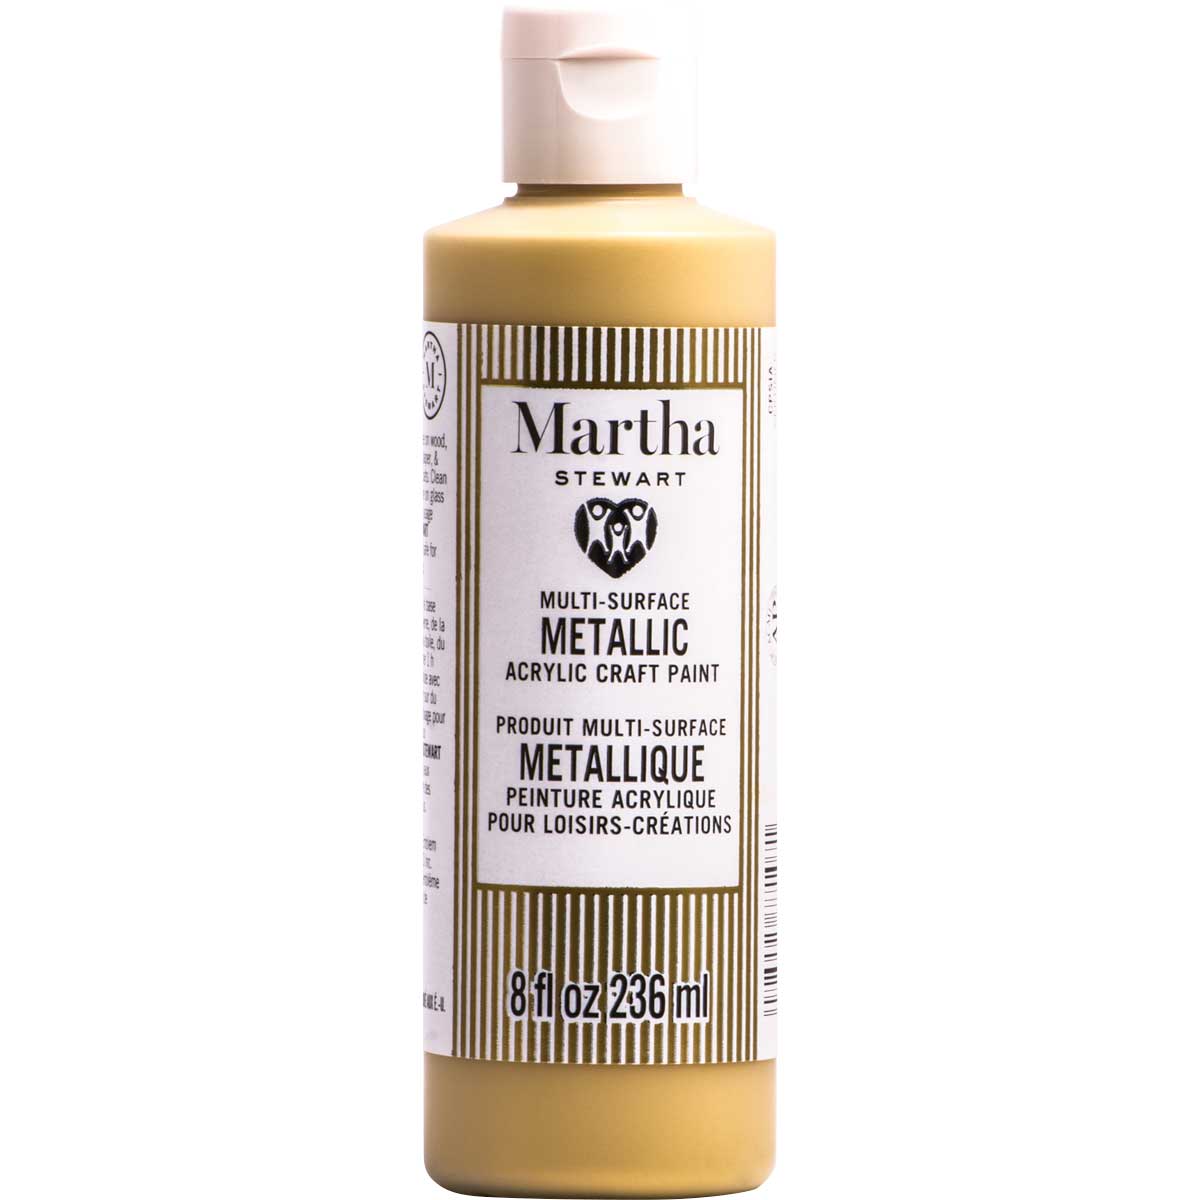 Martha Stewart ® Multi-Surface Metallic Acrylic Craft Paint CPSIA - Royal Gold, 8 oz. - 77107